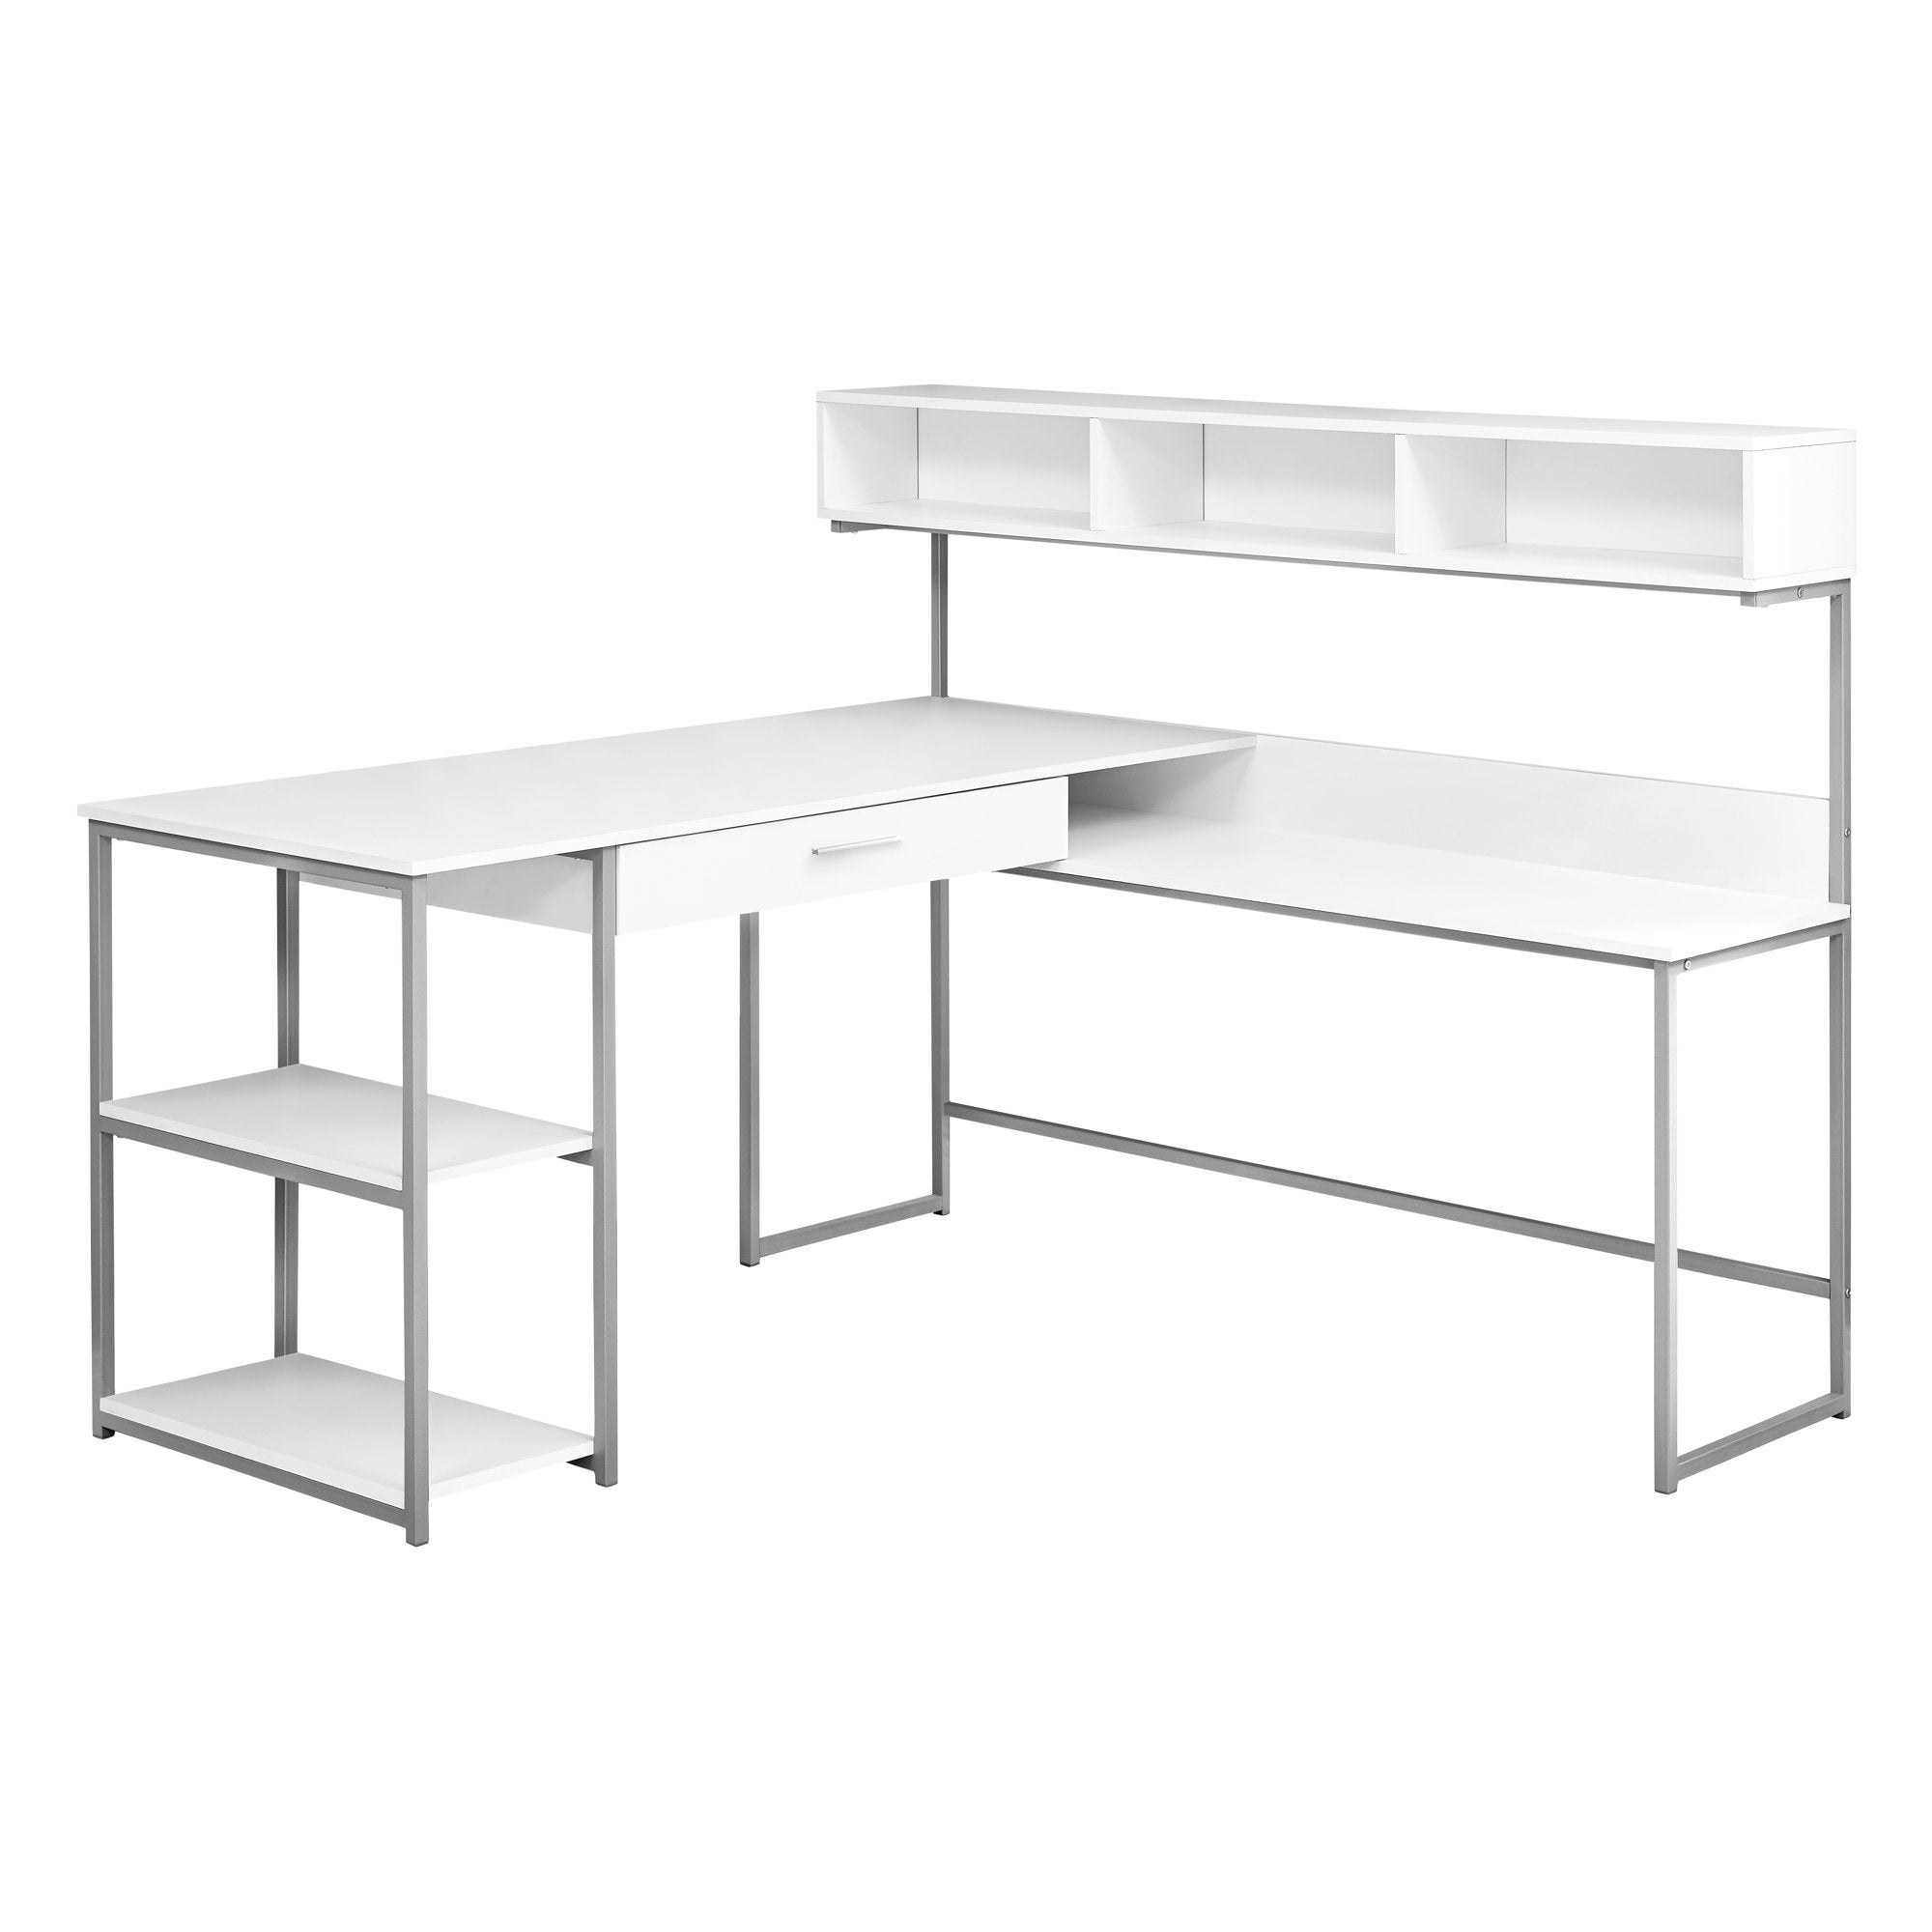 MN-317162    Computer Desk, Home Office, Corner, Storage Drawers, L Shape, Metal, Laminate, White, Contemporary, Modern